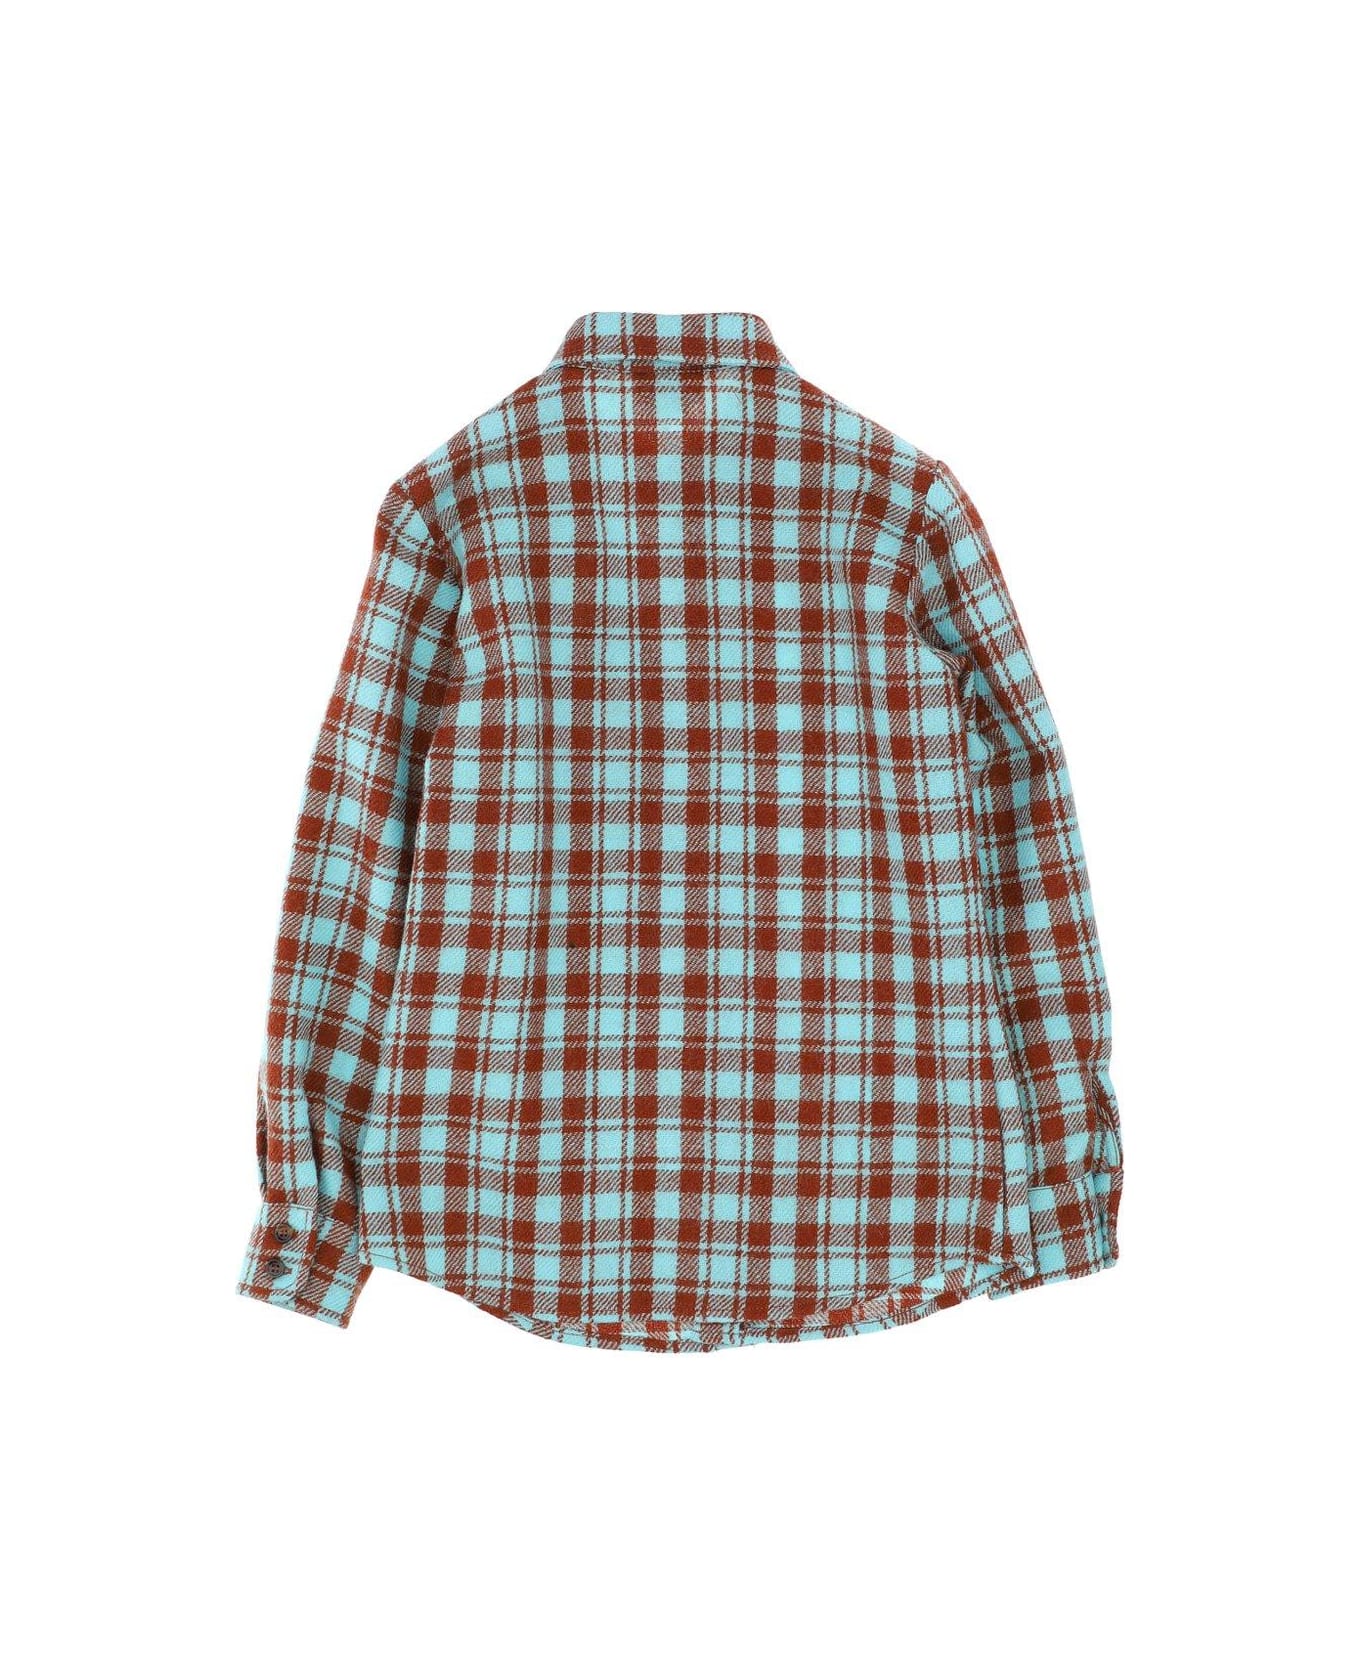 Gucci Plaid Pattern Long Sleeved Shirt